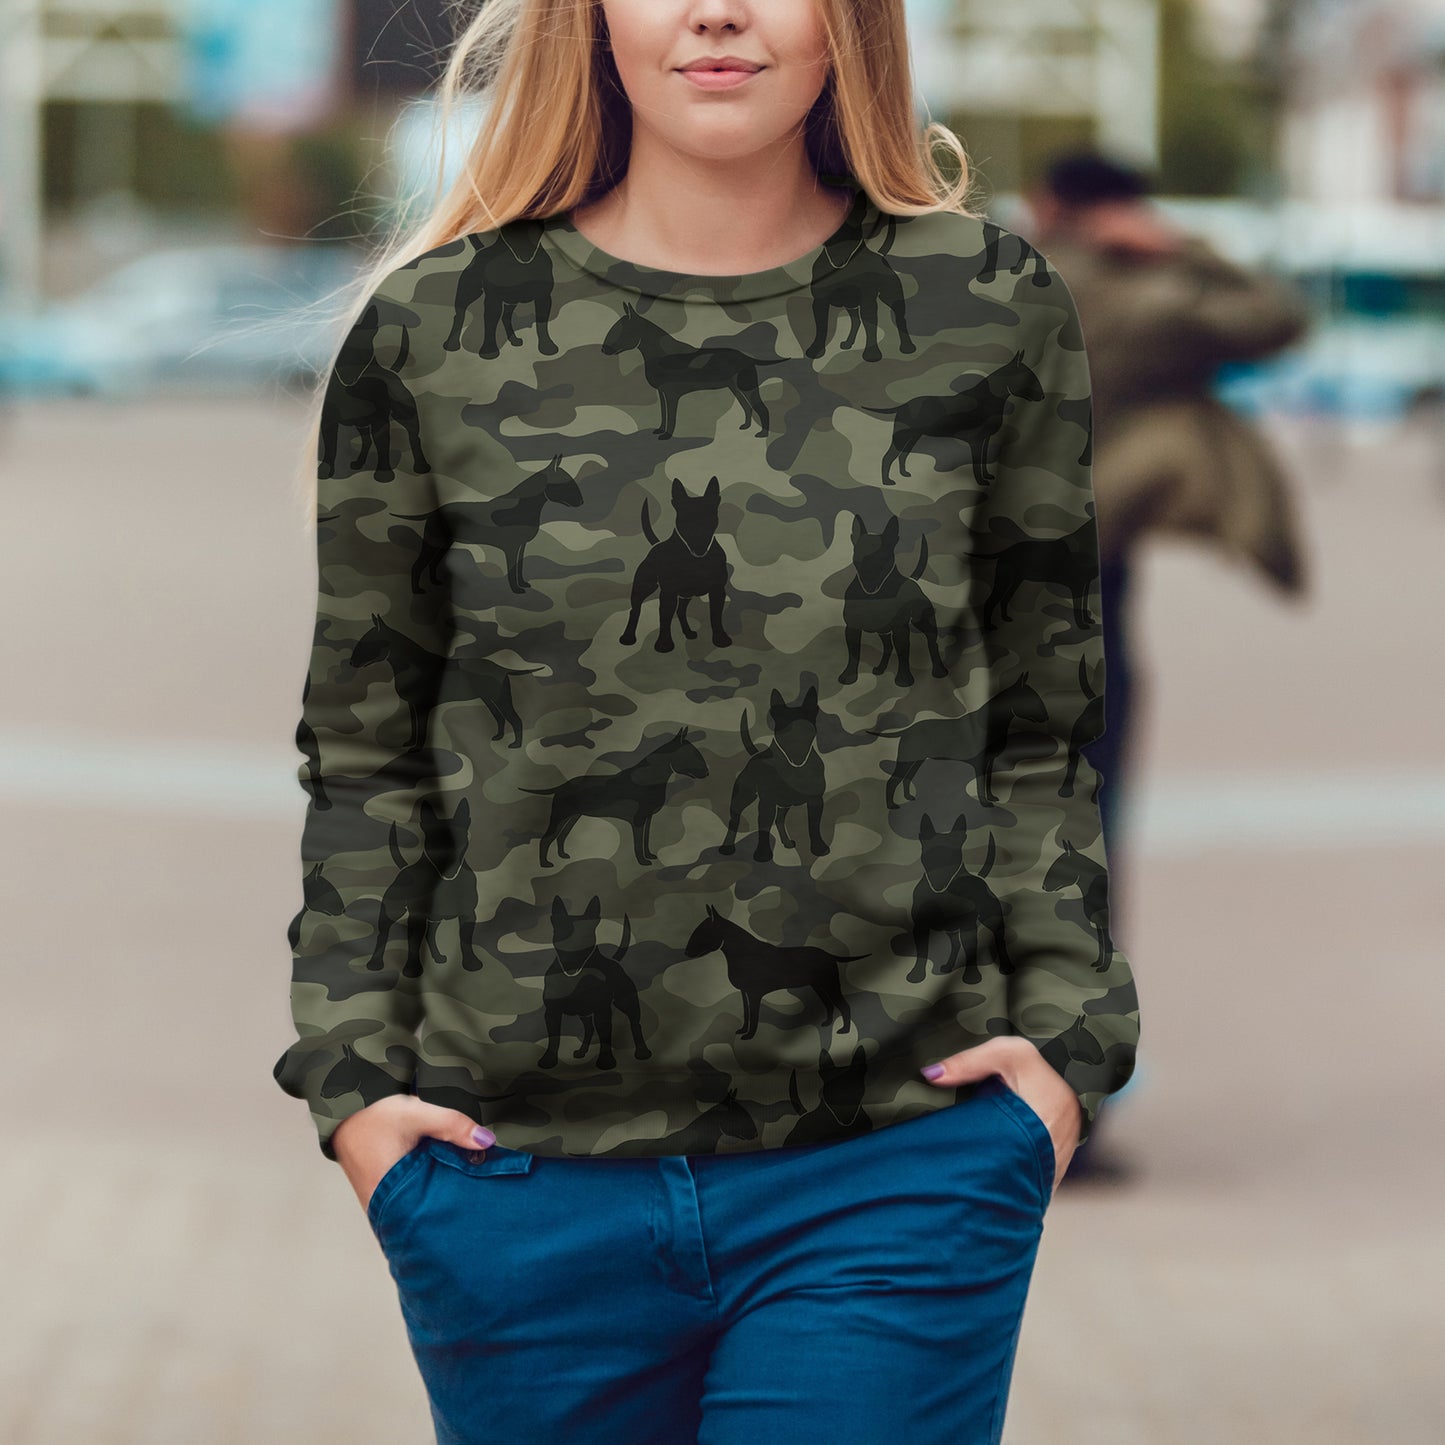 Street Style With Bull Terrier Camo Sweatshirt V1